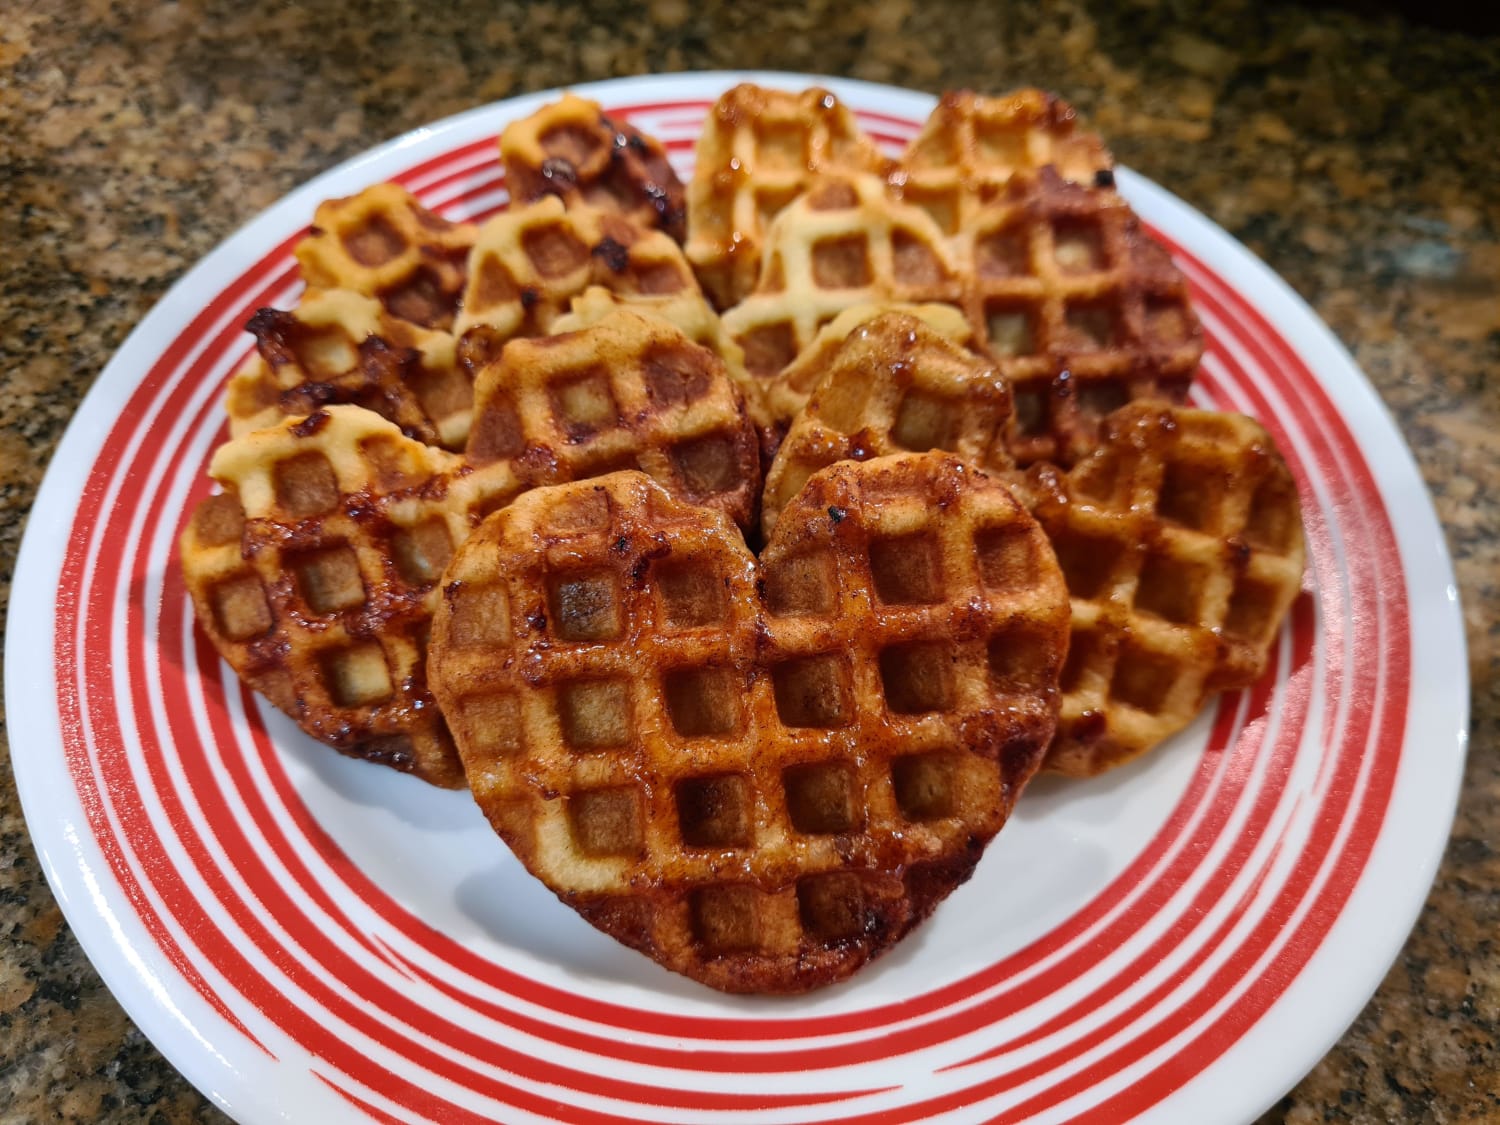 [Homemade] Cinnamon sugar filled croffles (croissant waffles)